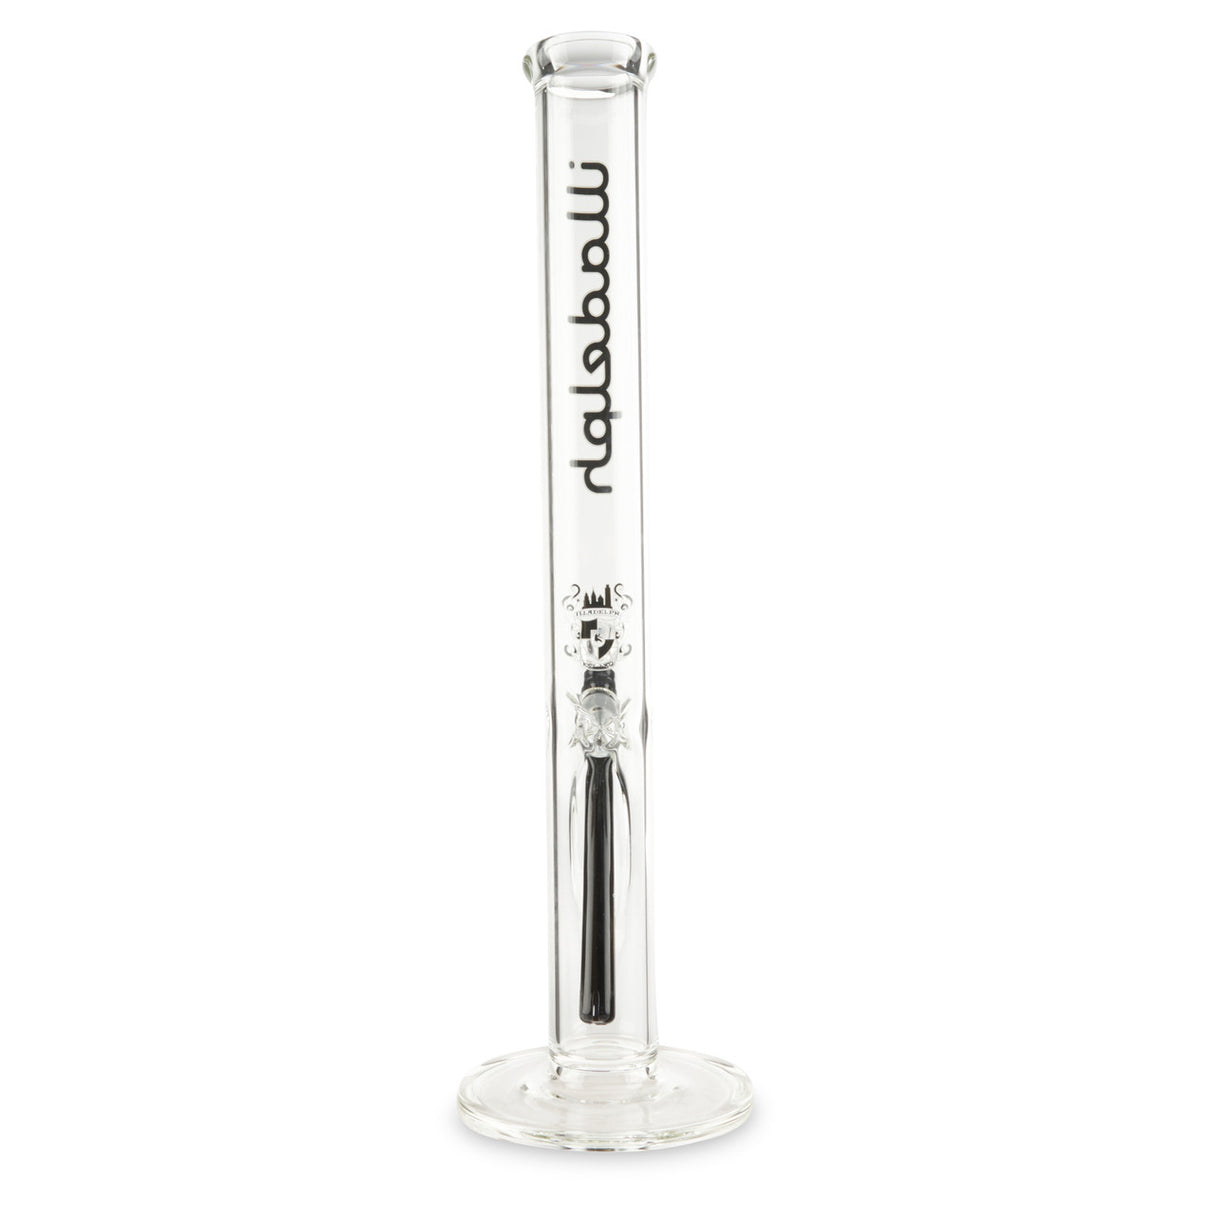 illadelph glass medium straight tube bong for smoking herbs